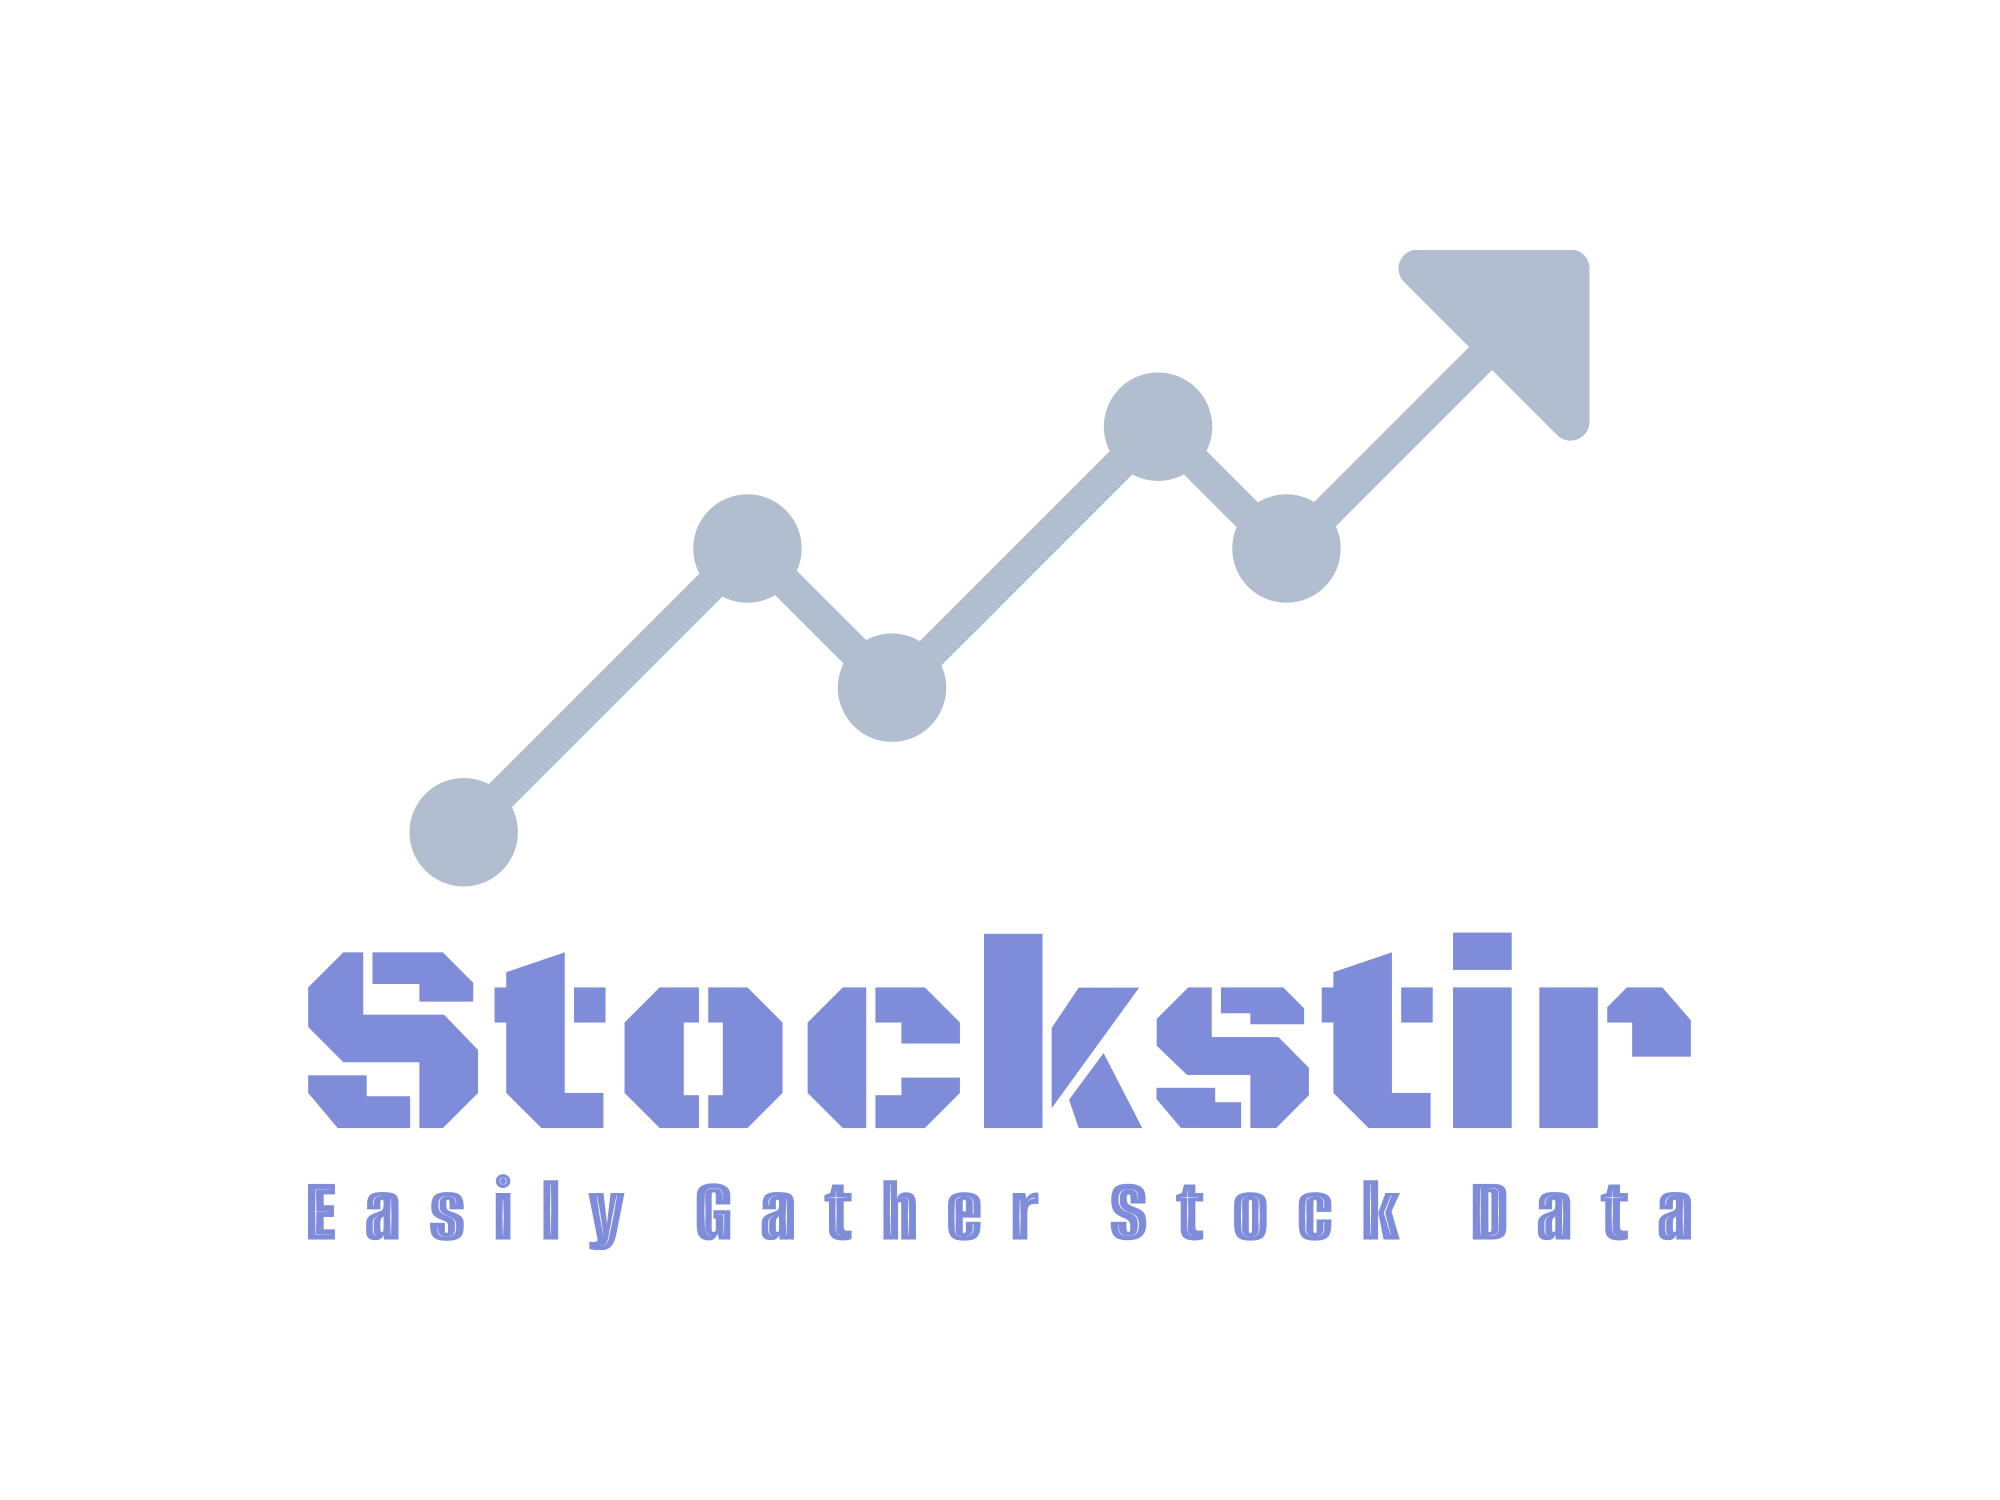 stockstir-logo